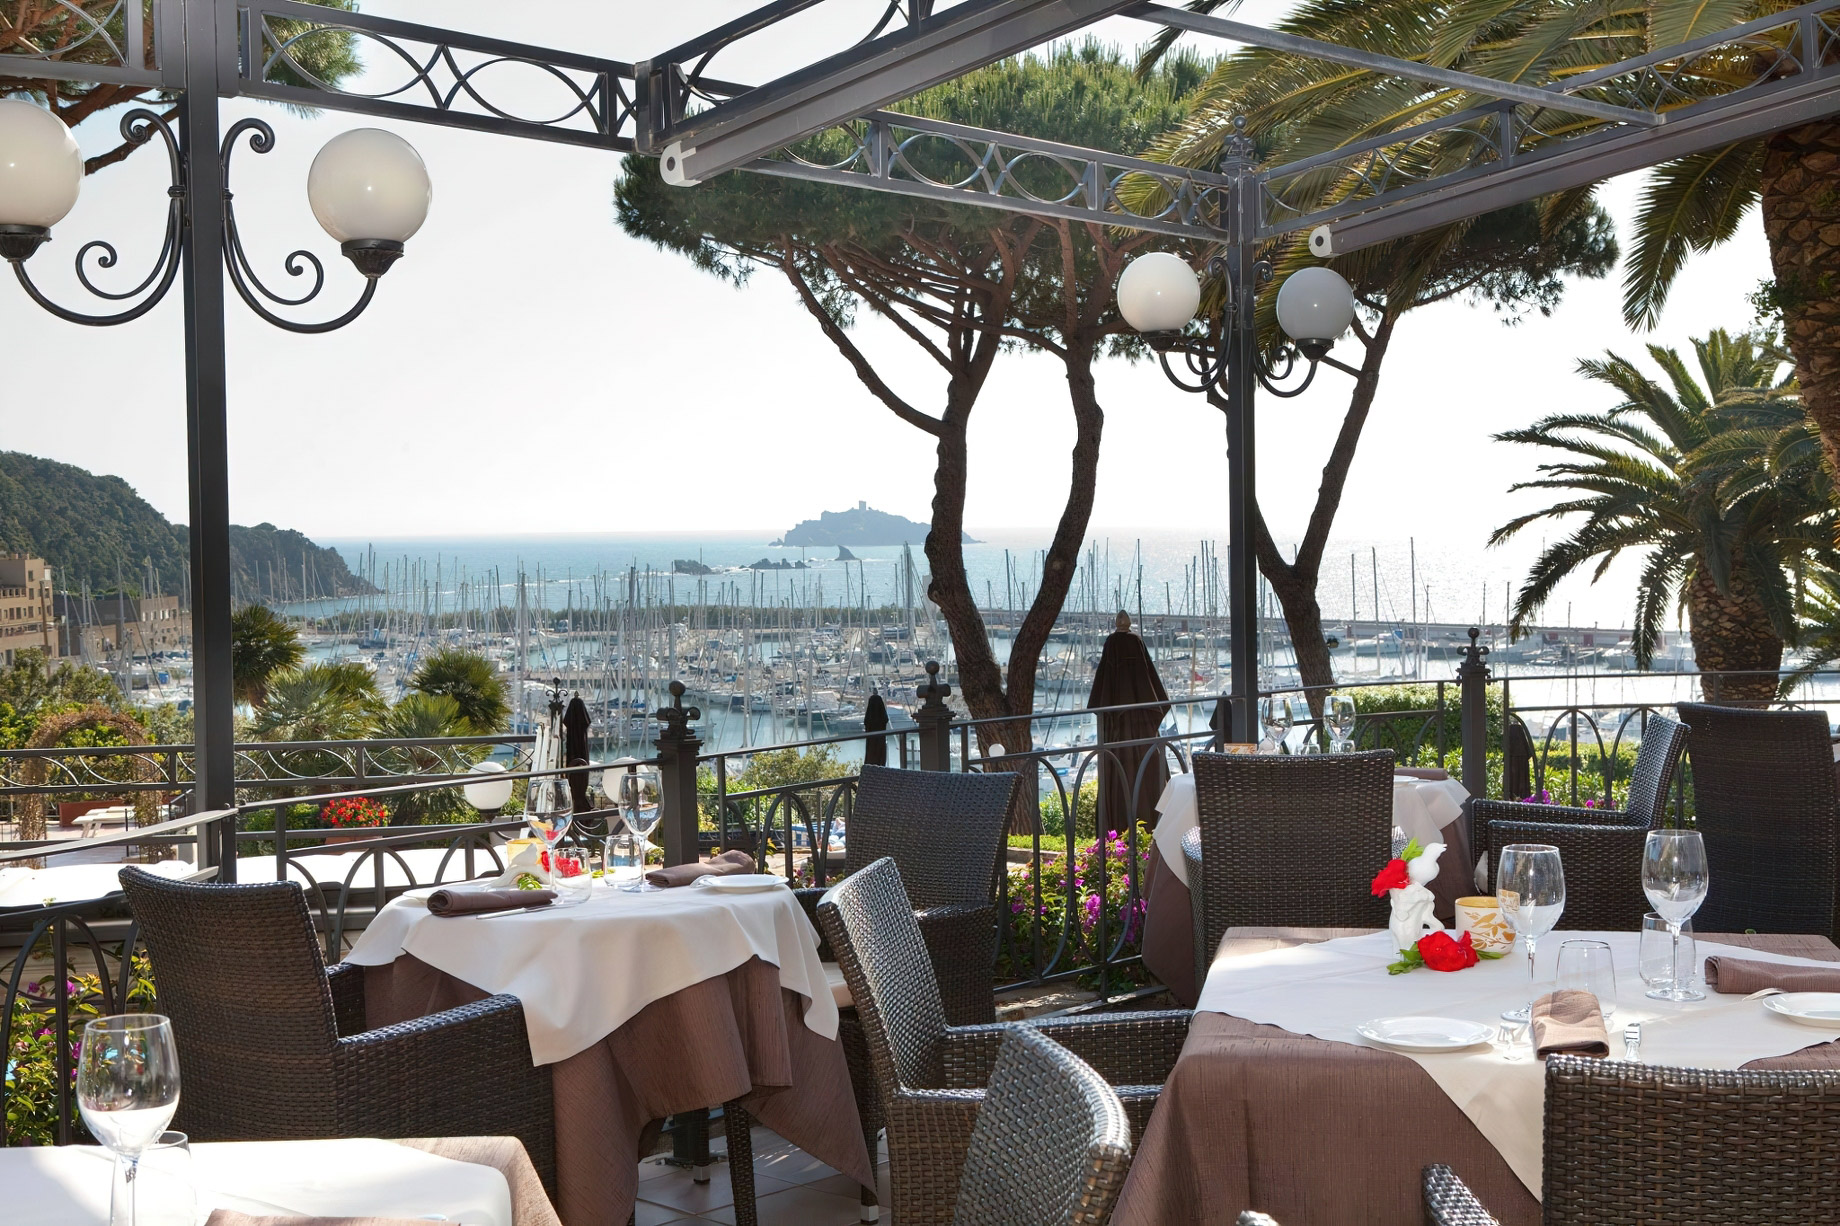 Baglioni Resort Cala del Porto Tuscany – Punta Ala, Italy – Belvedere Restaurant Terrace